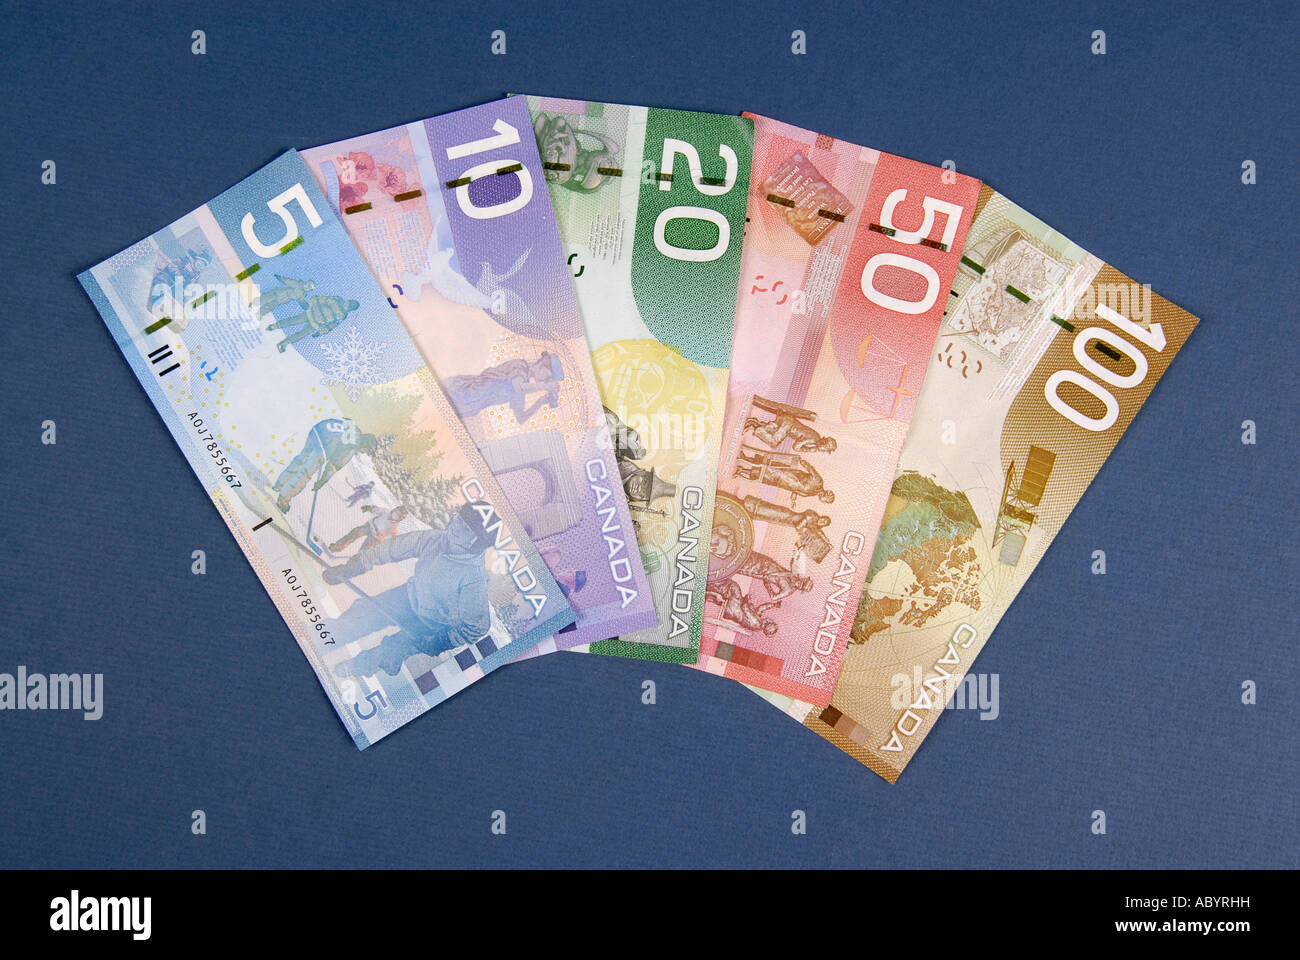 50 fifty canadian dollars Stock Photo - Alamy